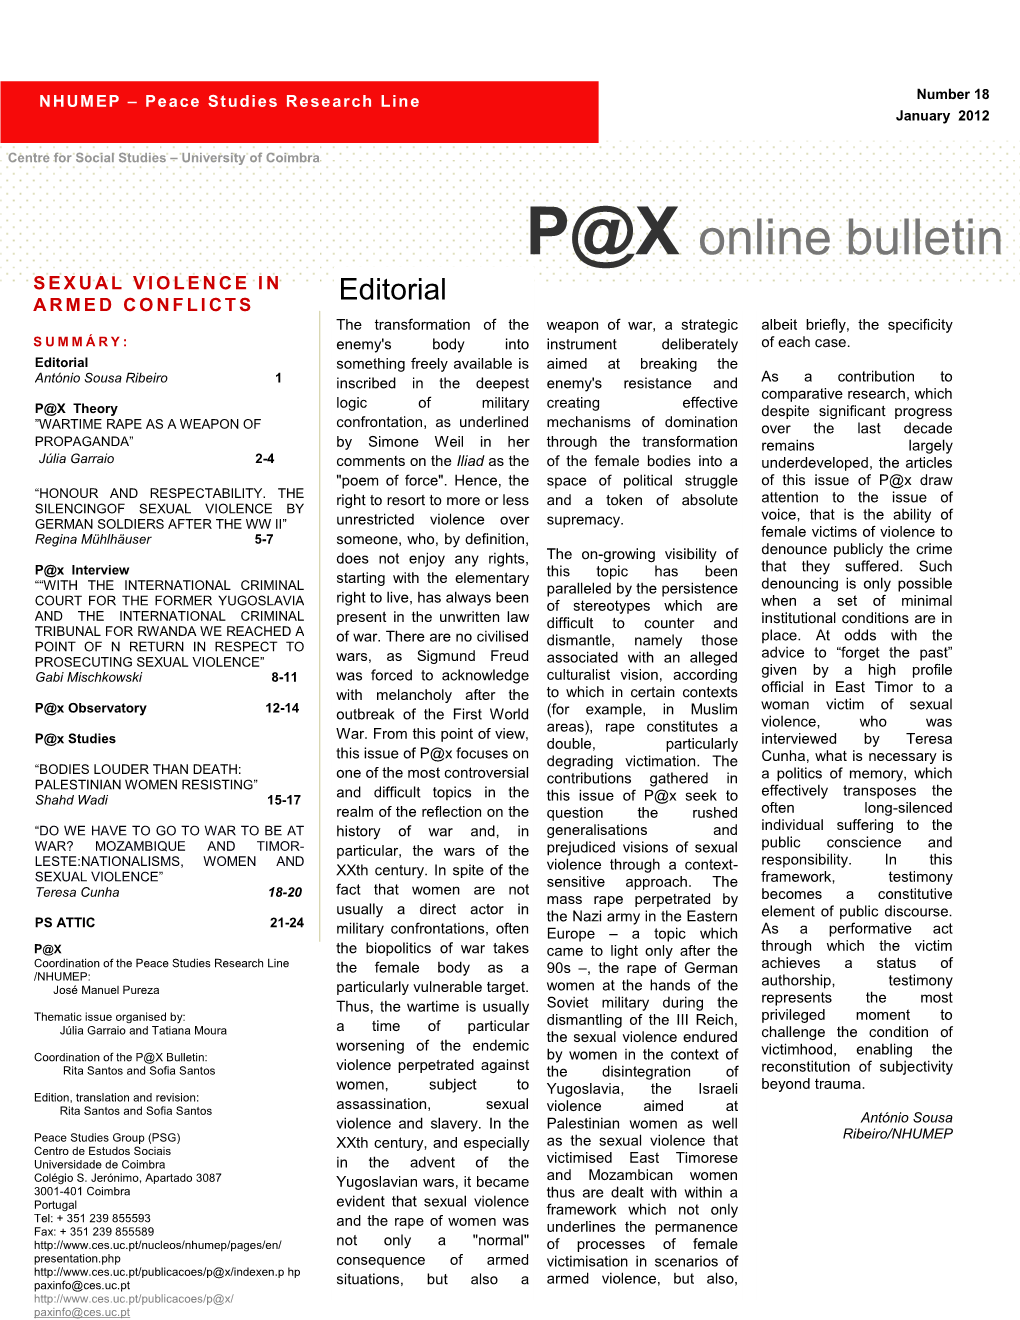 P@X Online Bulletin